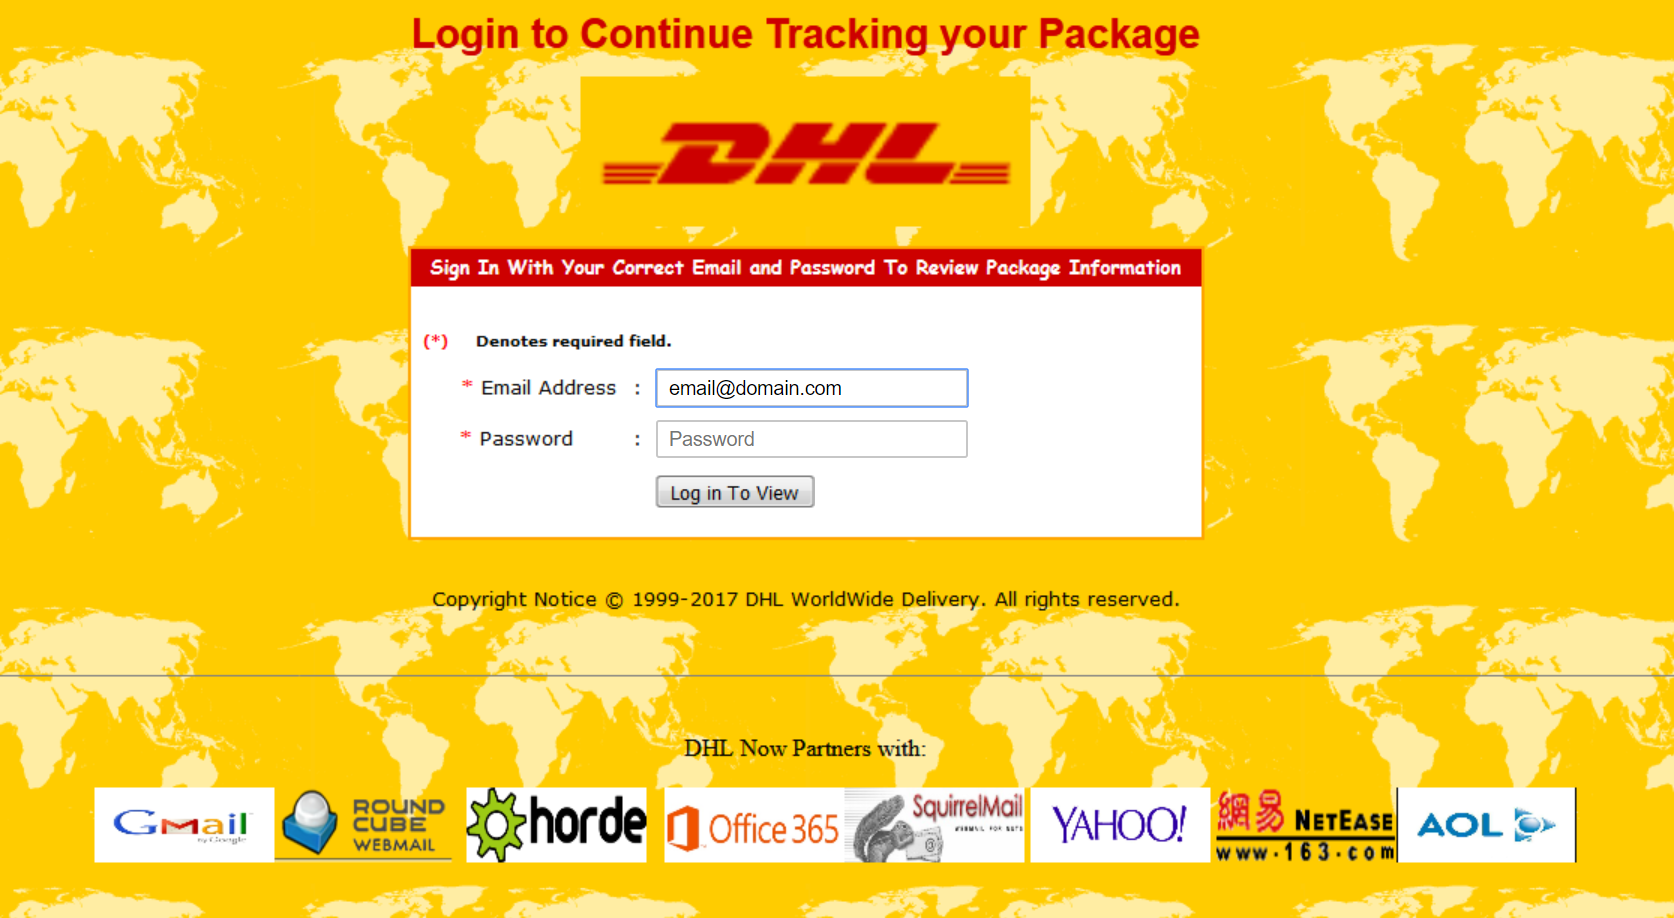 Re: Hard Copy Sent - DHL Express Spam Warning!!